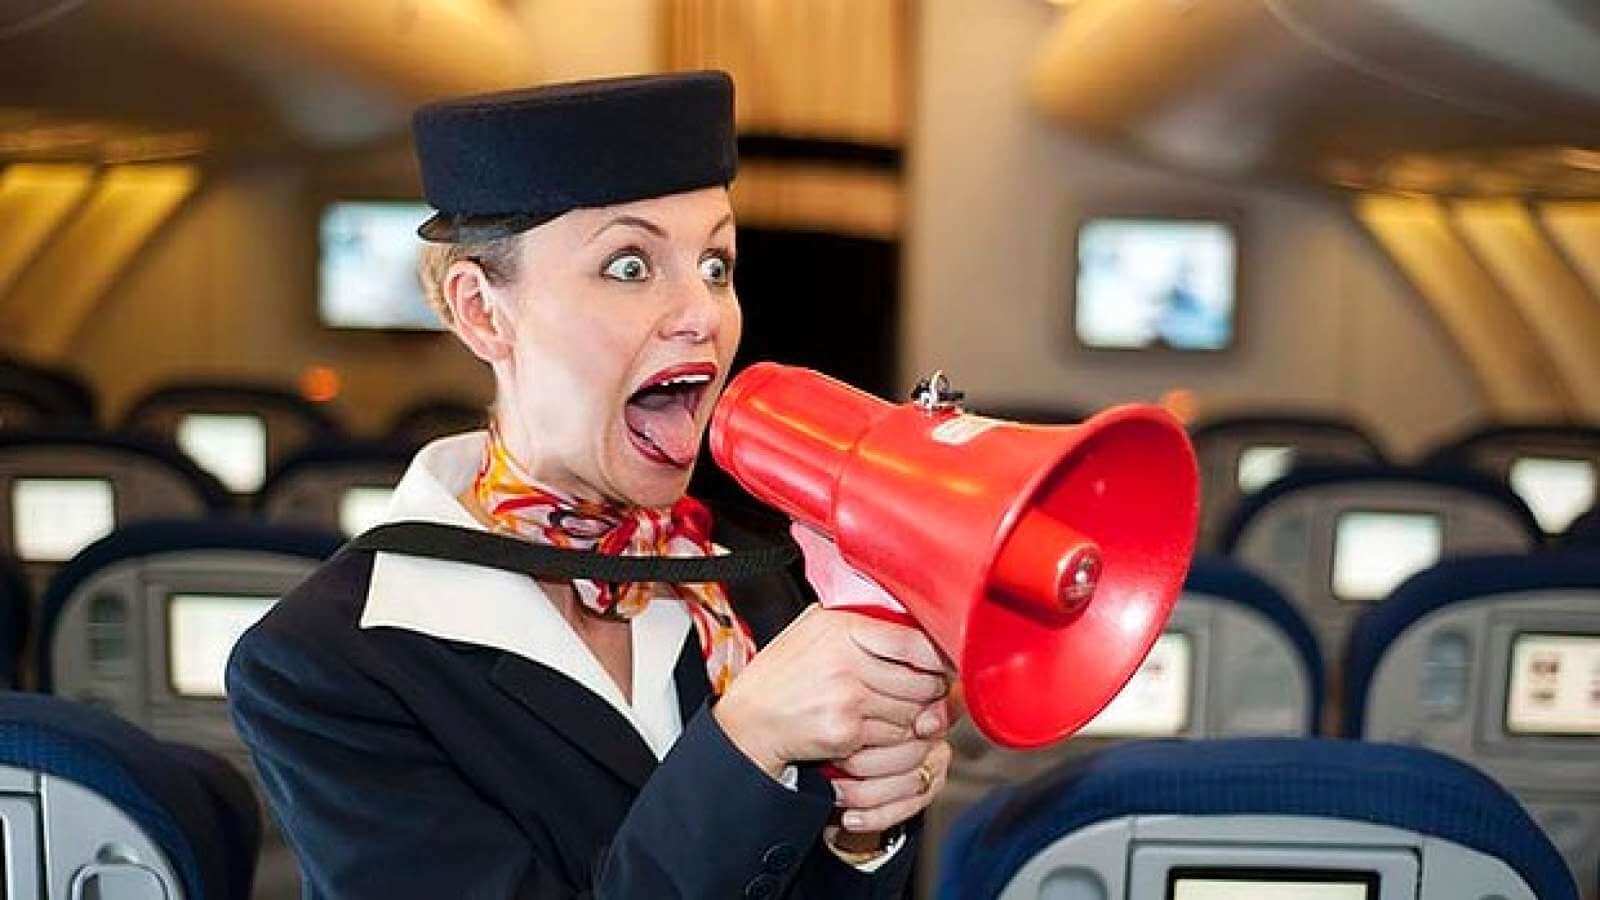 art-flight-attendant-angry-megaphone-620x349